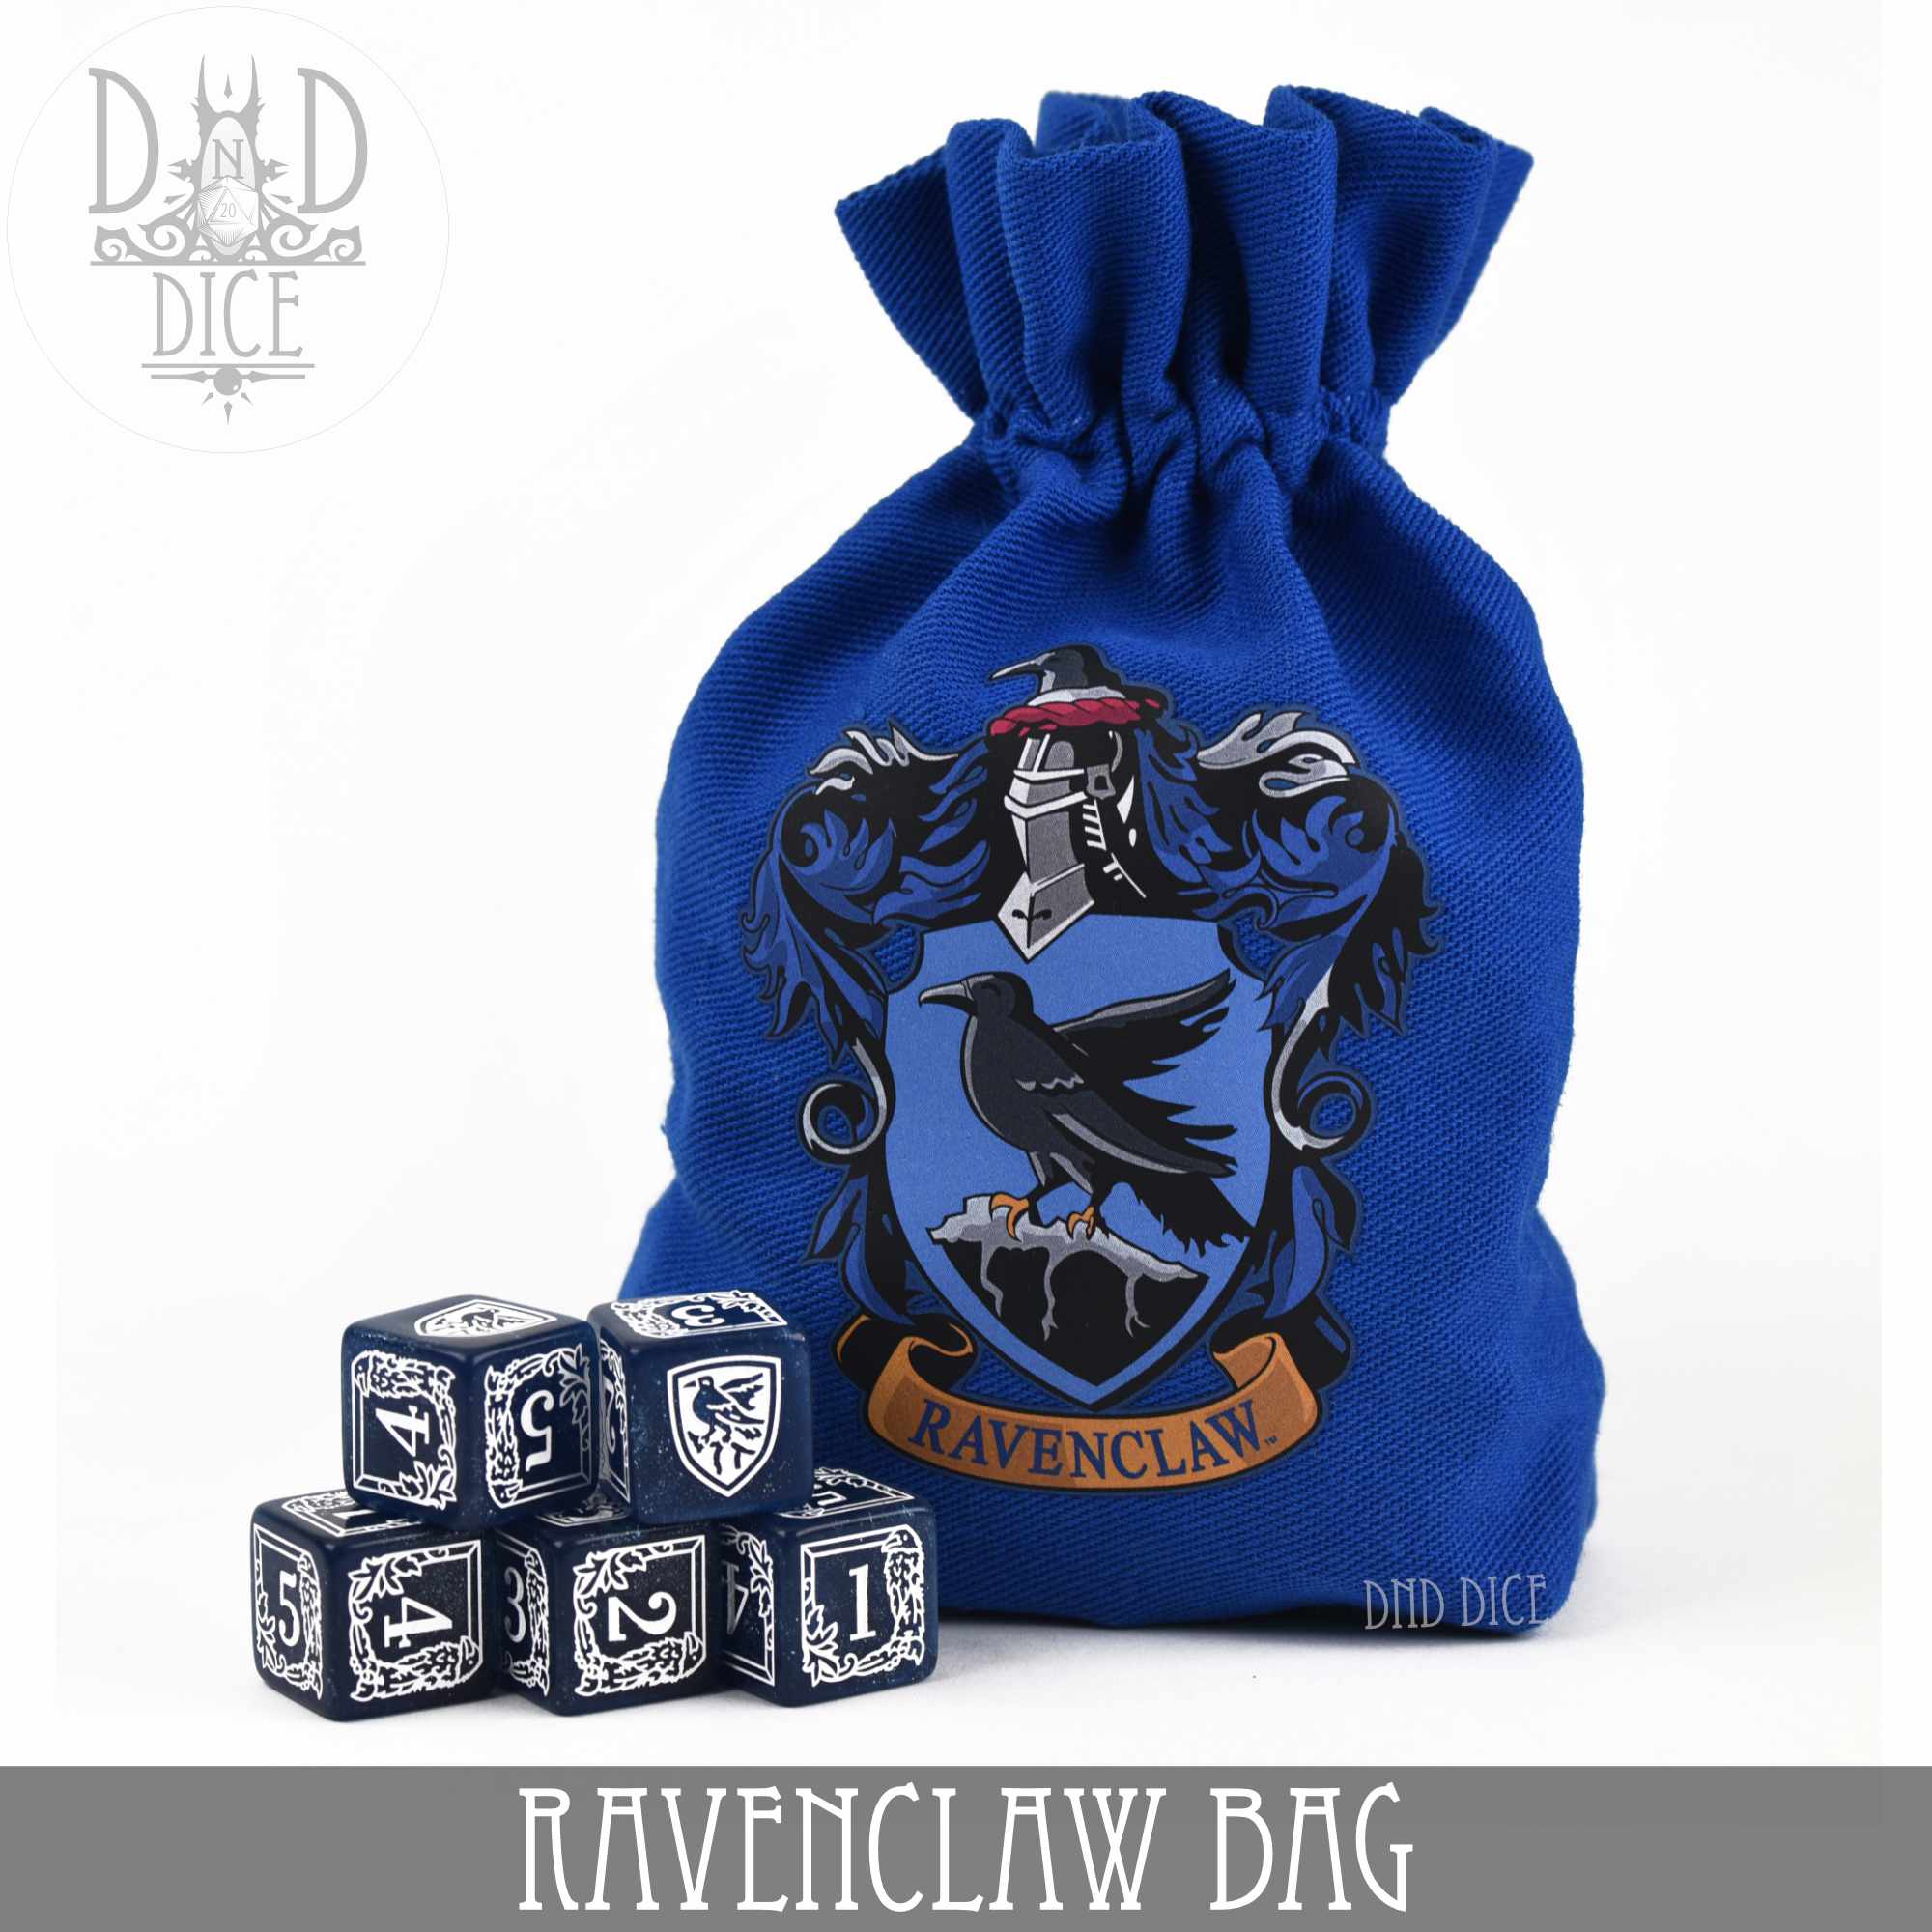 Harry Potter Ravenclaw Dice Bag & 5D6